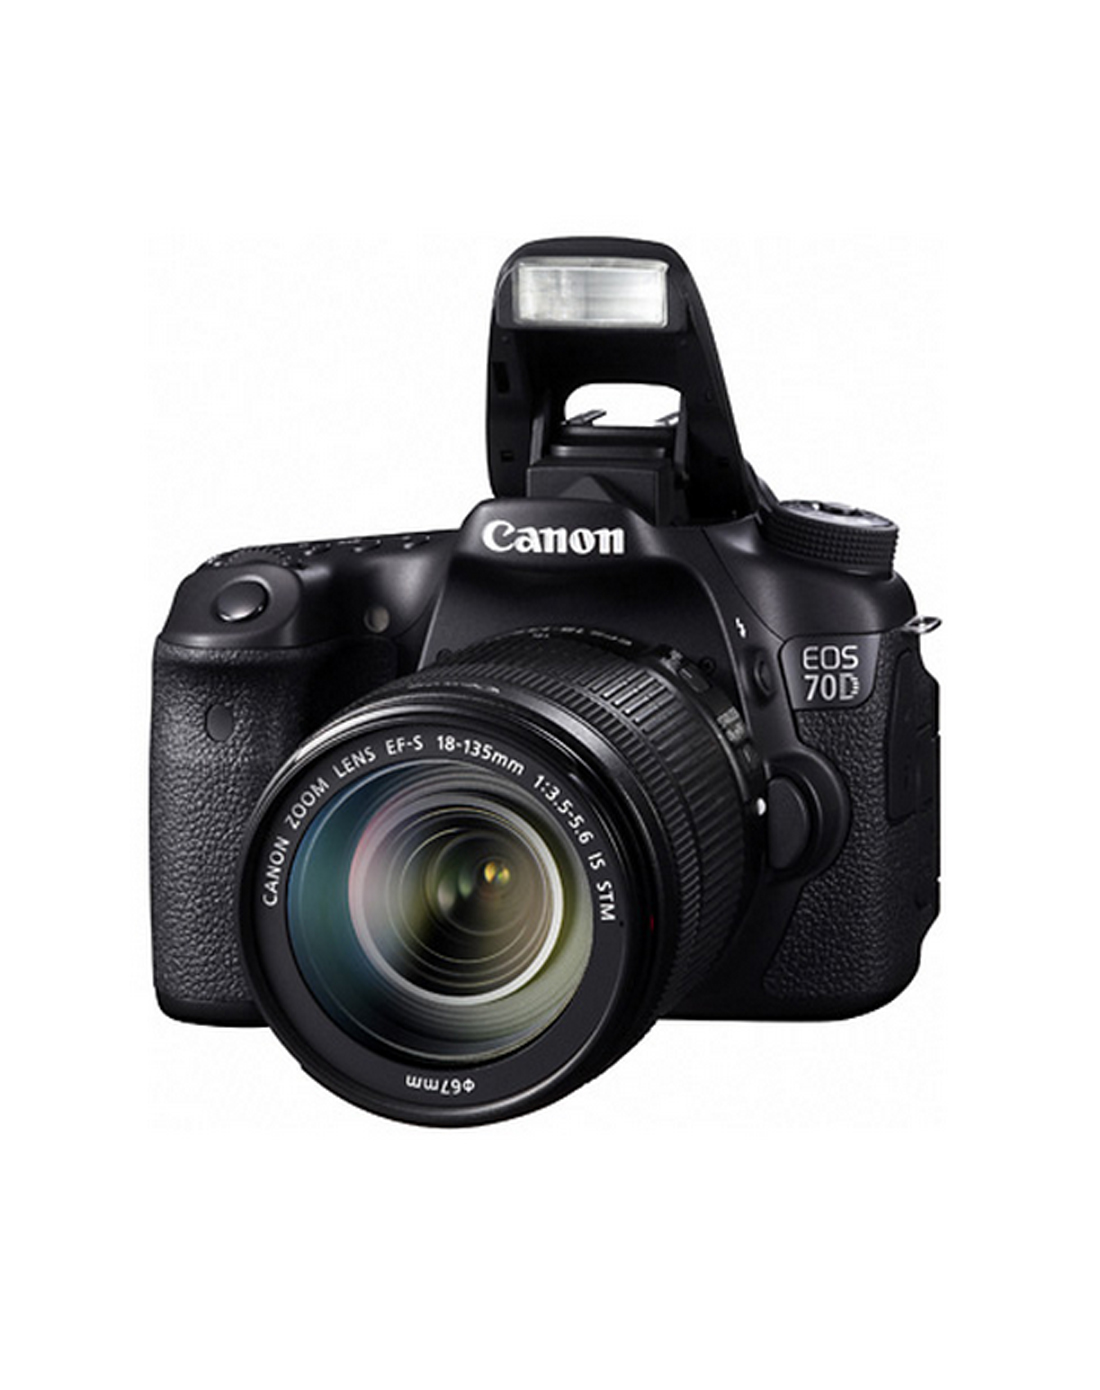 Canon Powershot A650 IS Digital Camera Review | ePHOTOzine